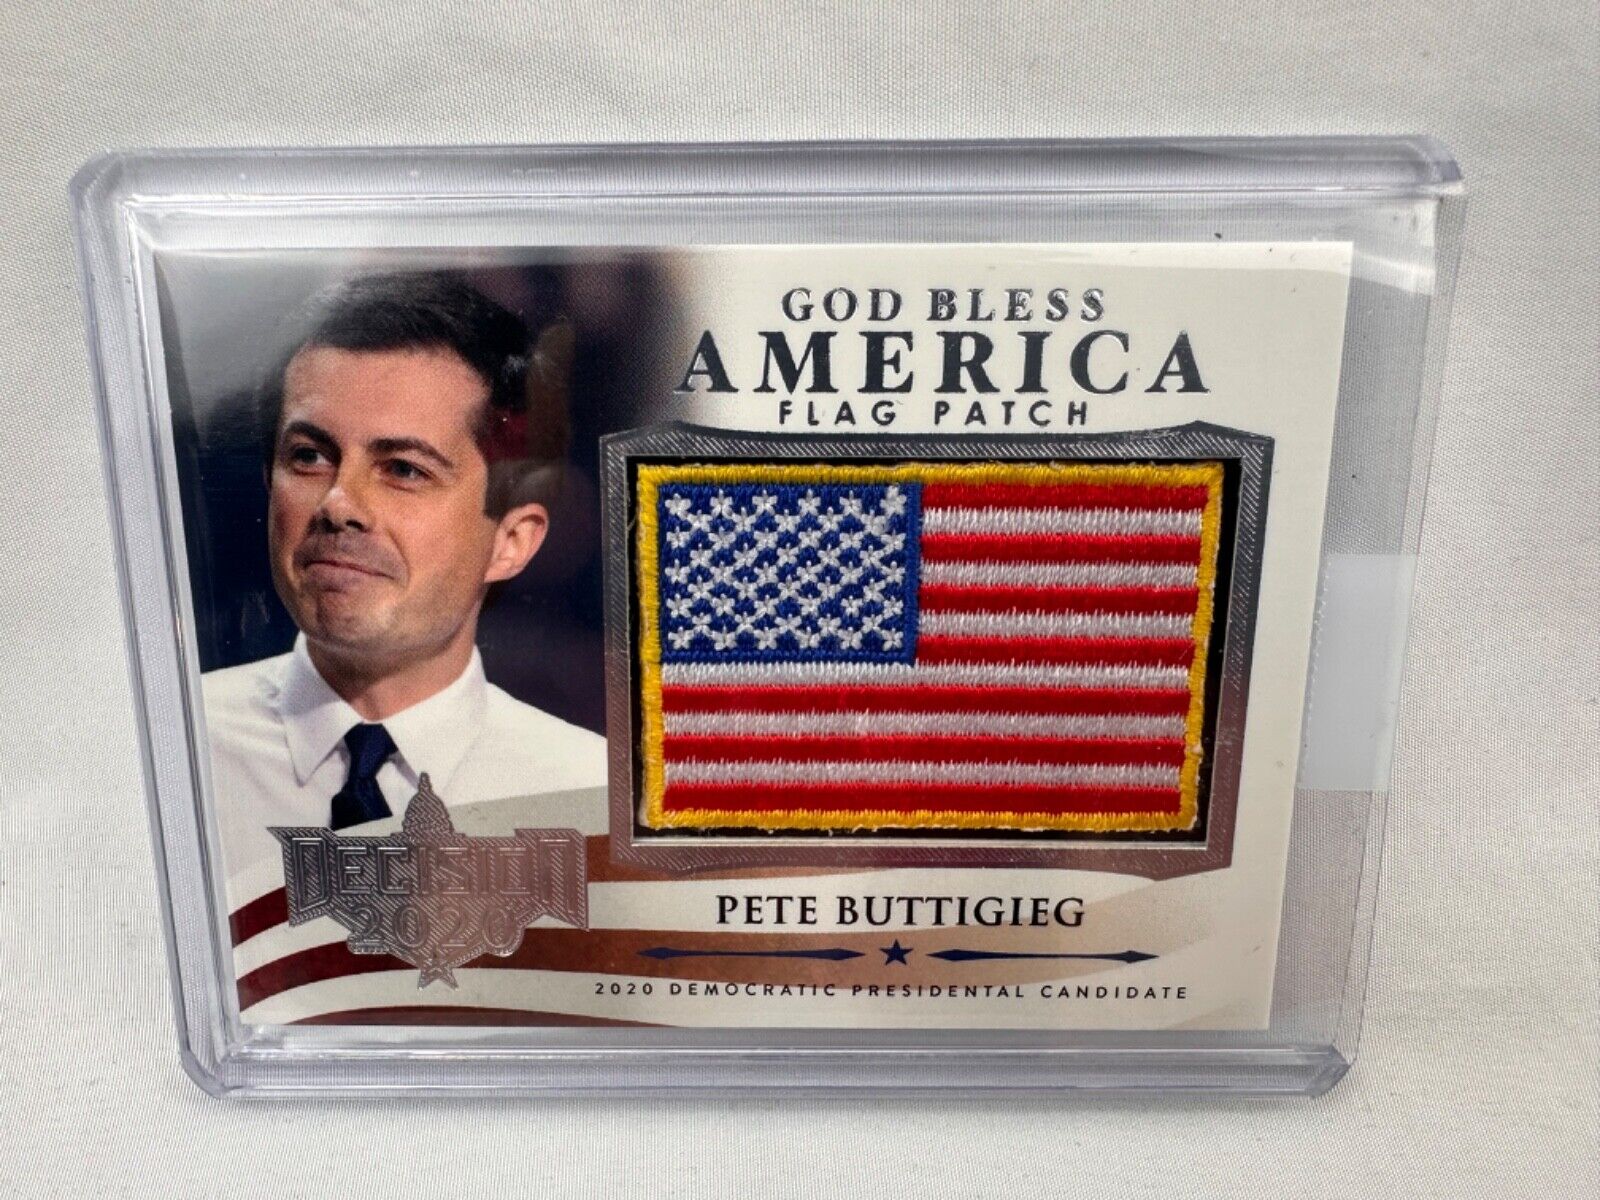 Pete Buttigieg GBA-54 2020 Decision God Bless America Flag Patch Silver Card